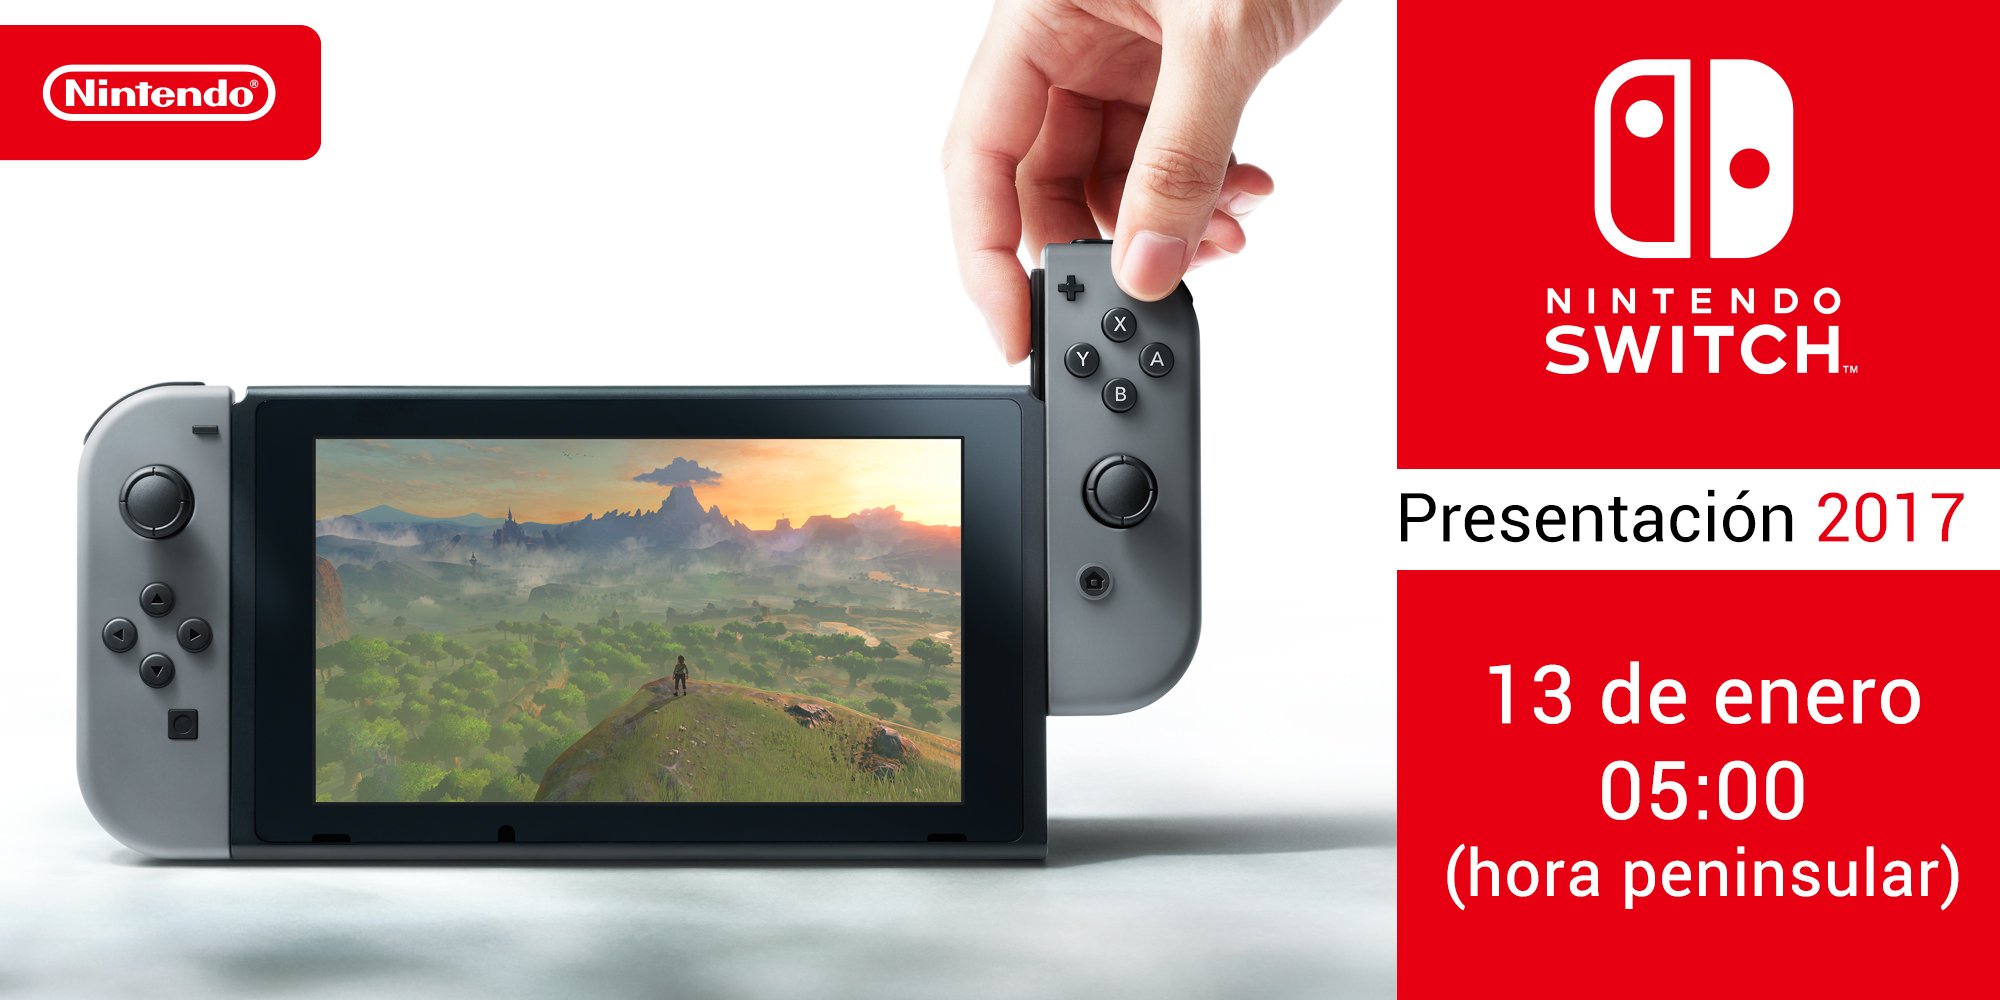 Nintendo España Twitter: "La presentación de #NintendoSwitch 2017 tendrá lugar en Tokyo el día 5 de la mañana. ▻ https://t.co/6kqUl8VzQc https://t.co/ga4Vq9aNfM" / Twitter